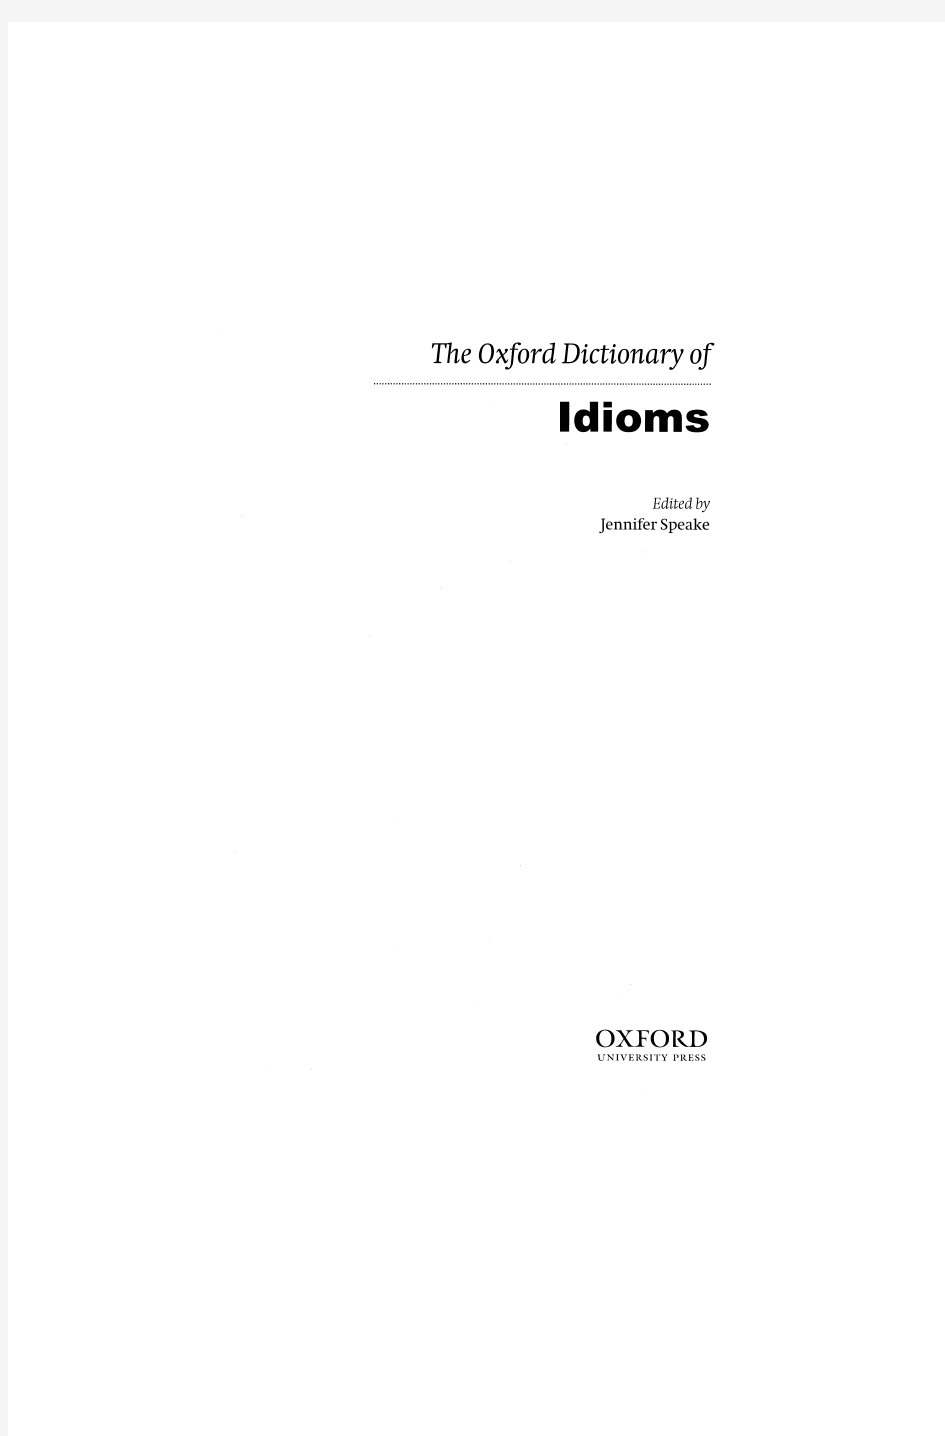 牛津常用英语词典Oxford Dictionary of Idioms